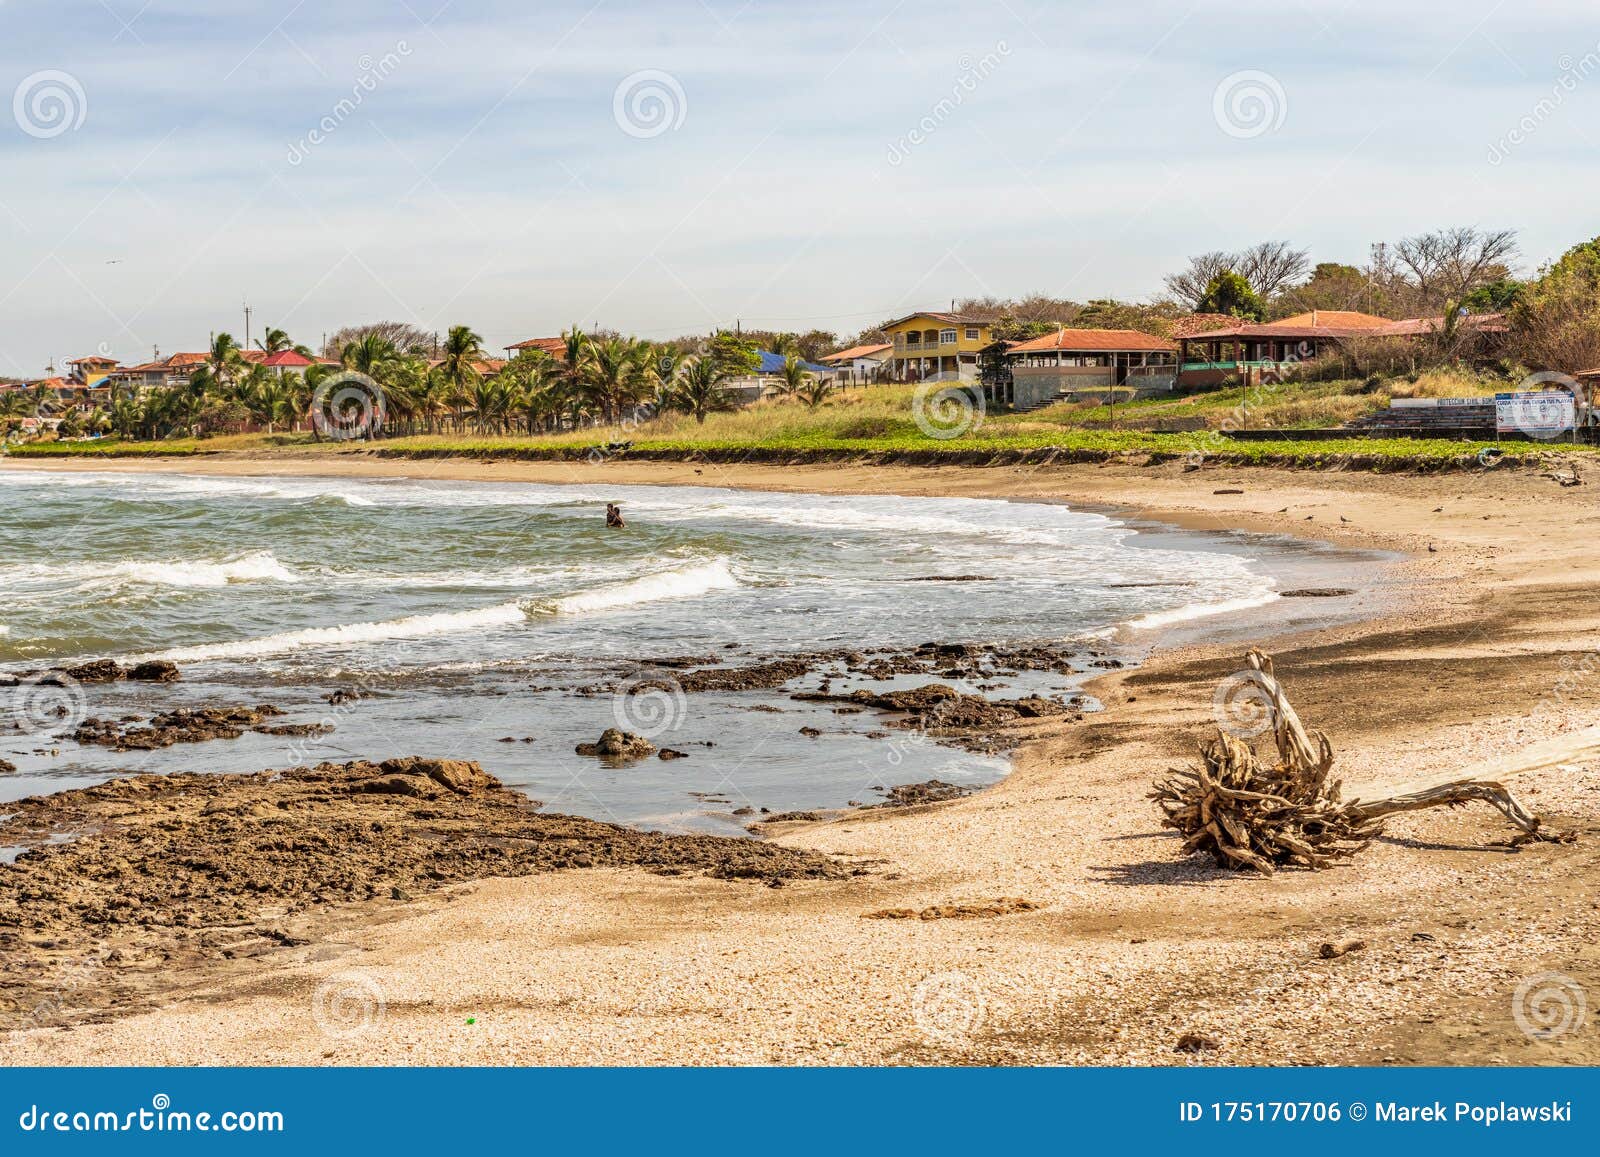 the beach in las tablas in azuero peninsula, panama